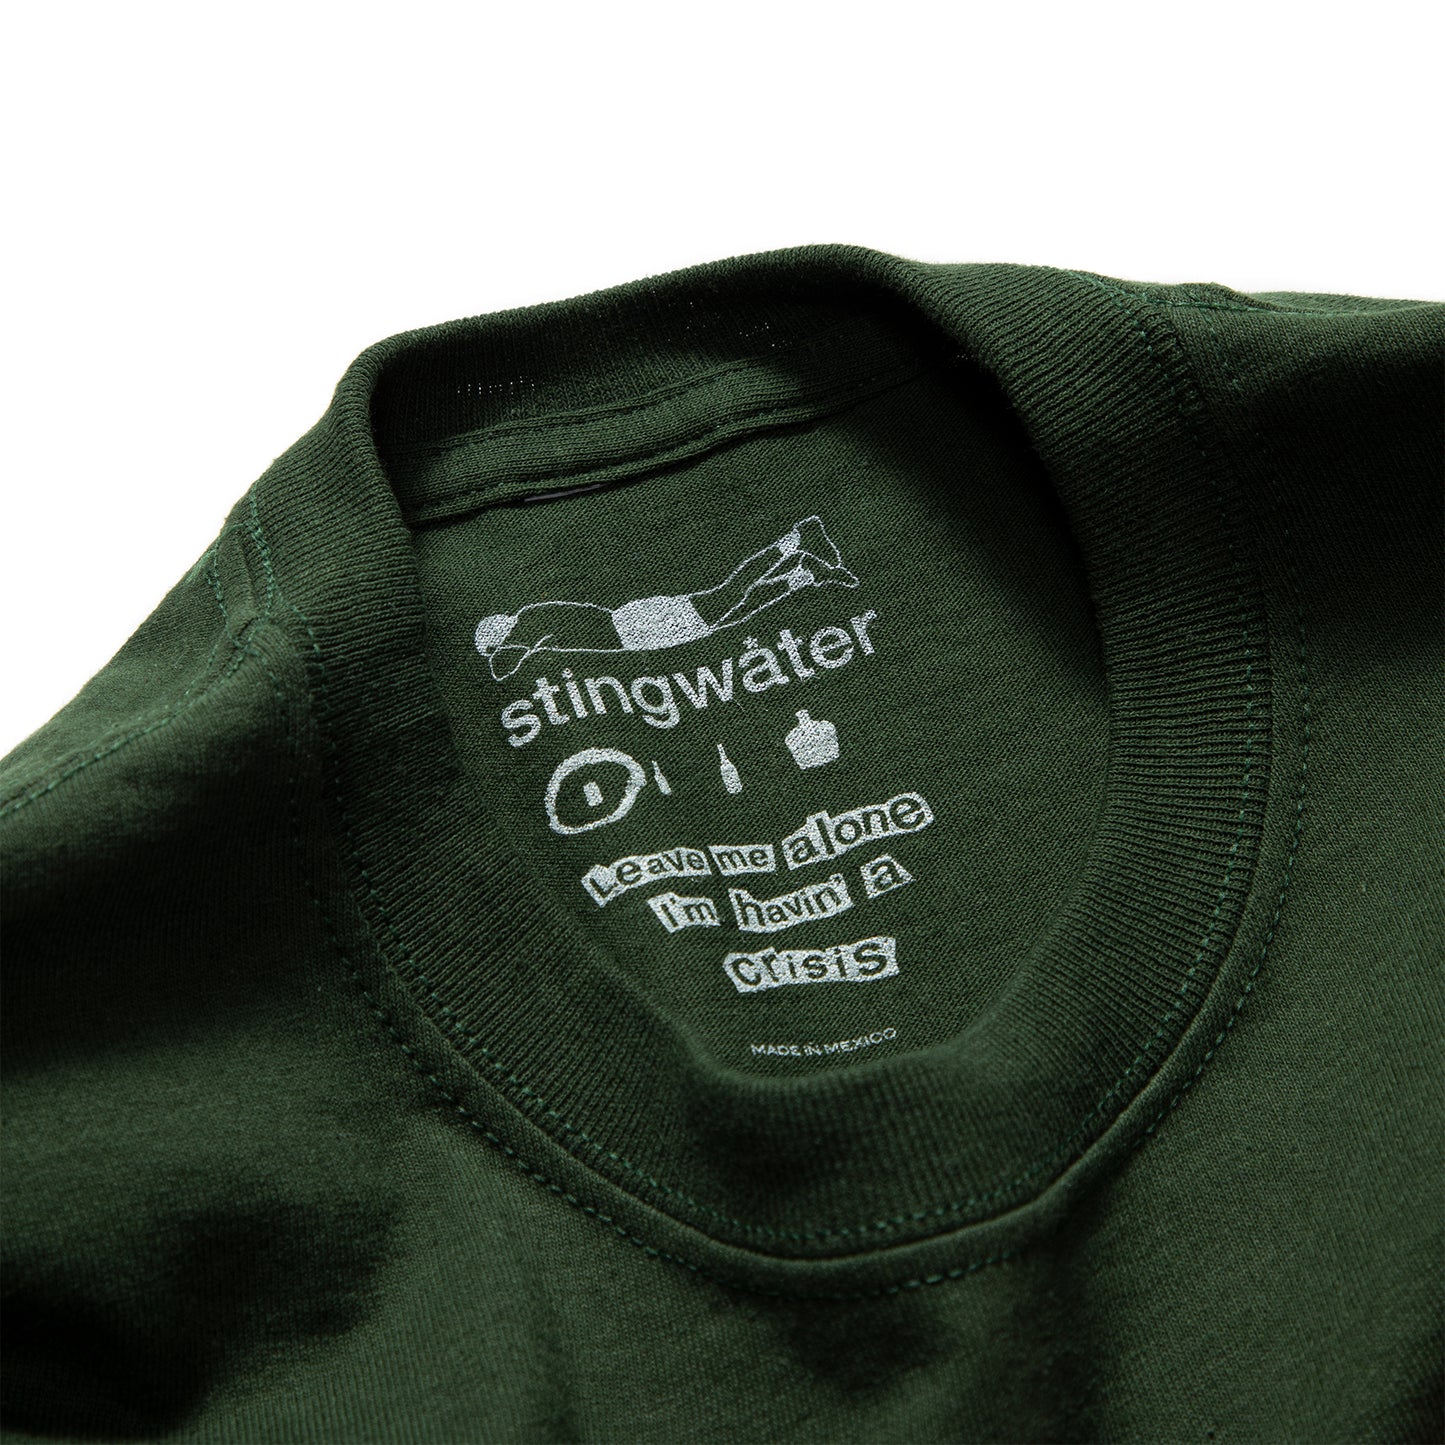 Stingwater INDE T Shirt (Forest Green)